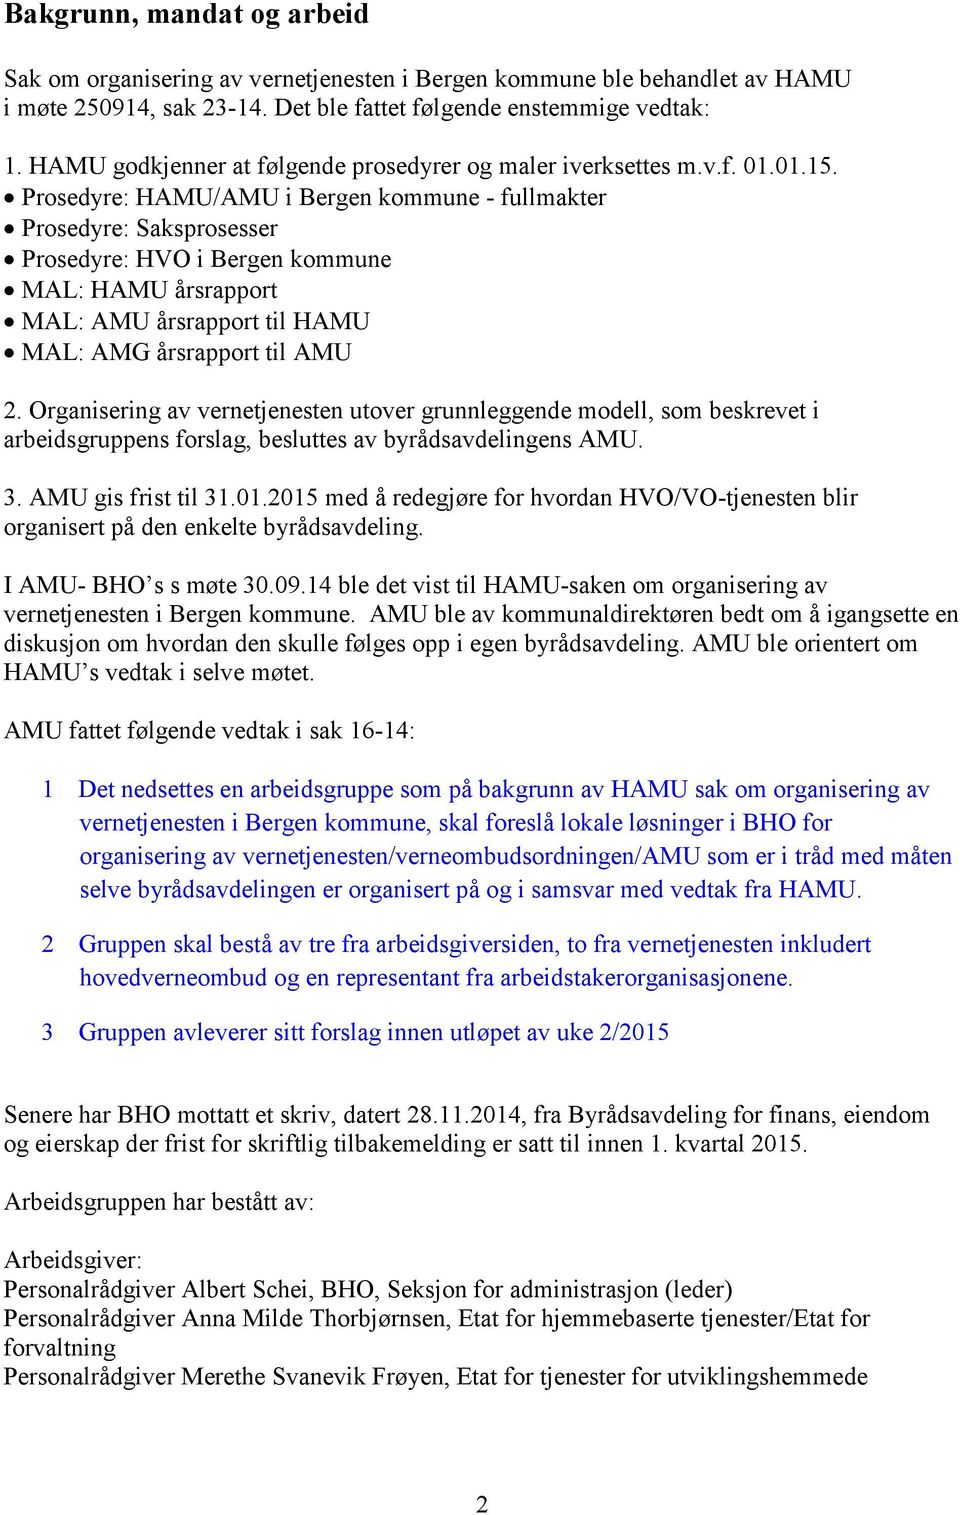 Prosedyre: HAMU/AMU i Bergen kommune - fullmakter Prosedyre: Saksprosesser Prosedyre: HVO i Bergen kommune MAL: HAMU årsrapport MAL: AMU årsrapport til HAMU MAL: AMG årsrapport til AMU 2.